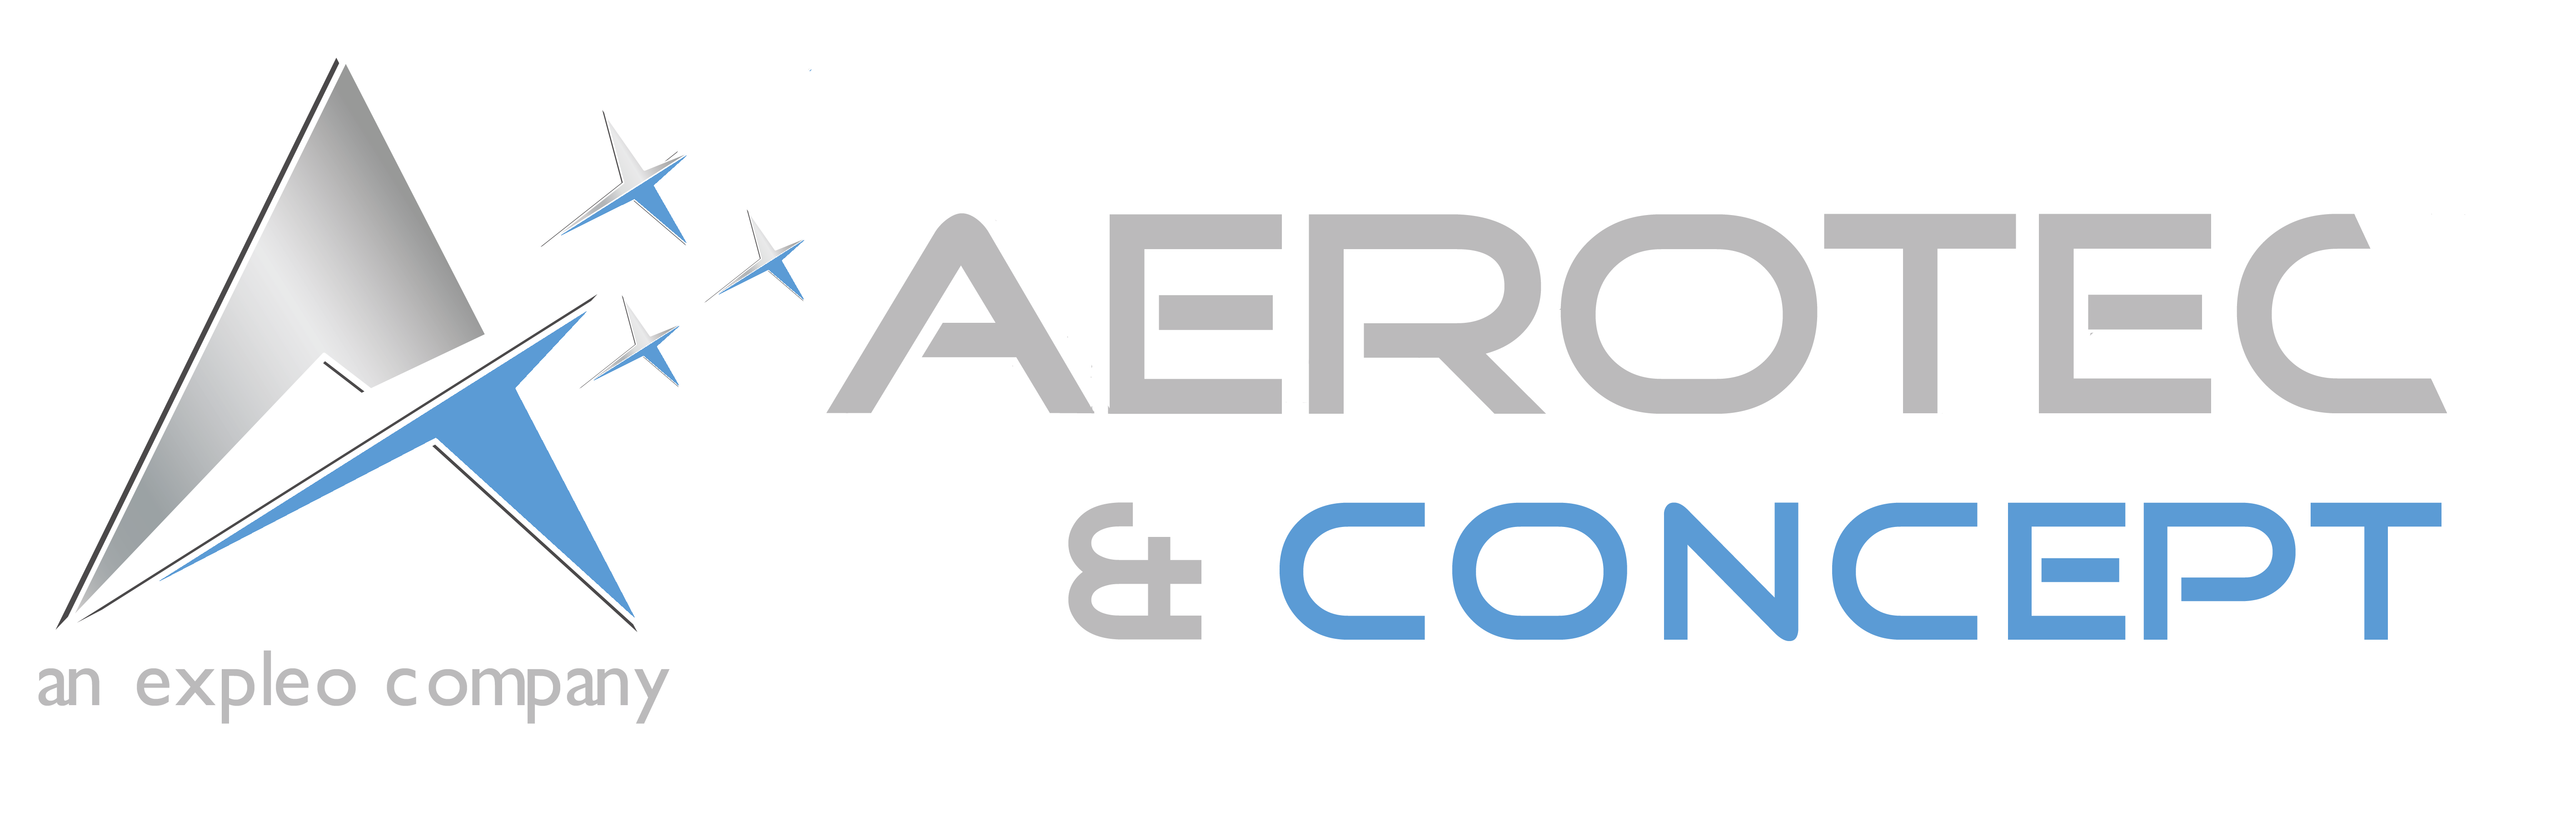 Aerotec & Concept